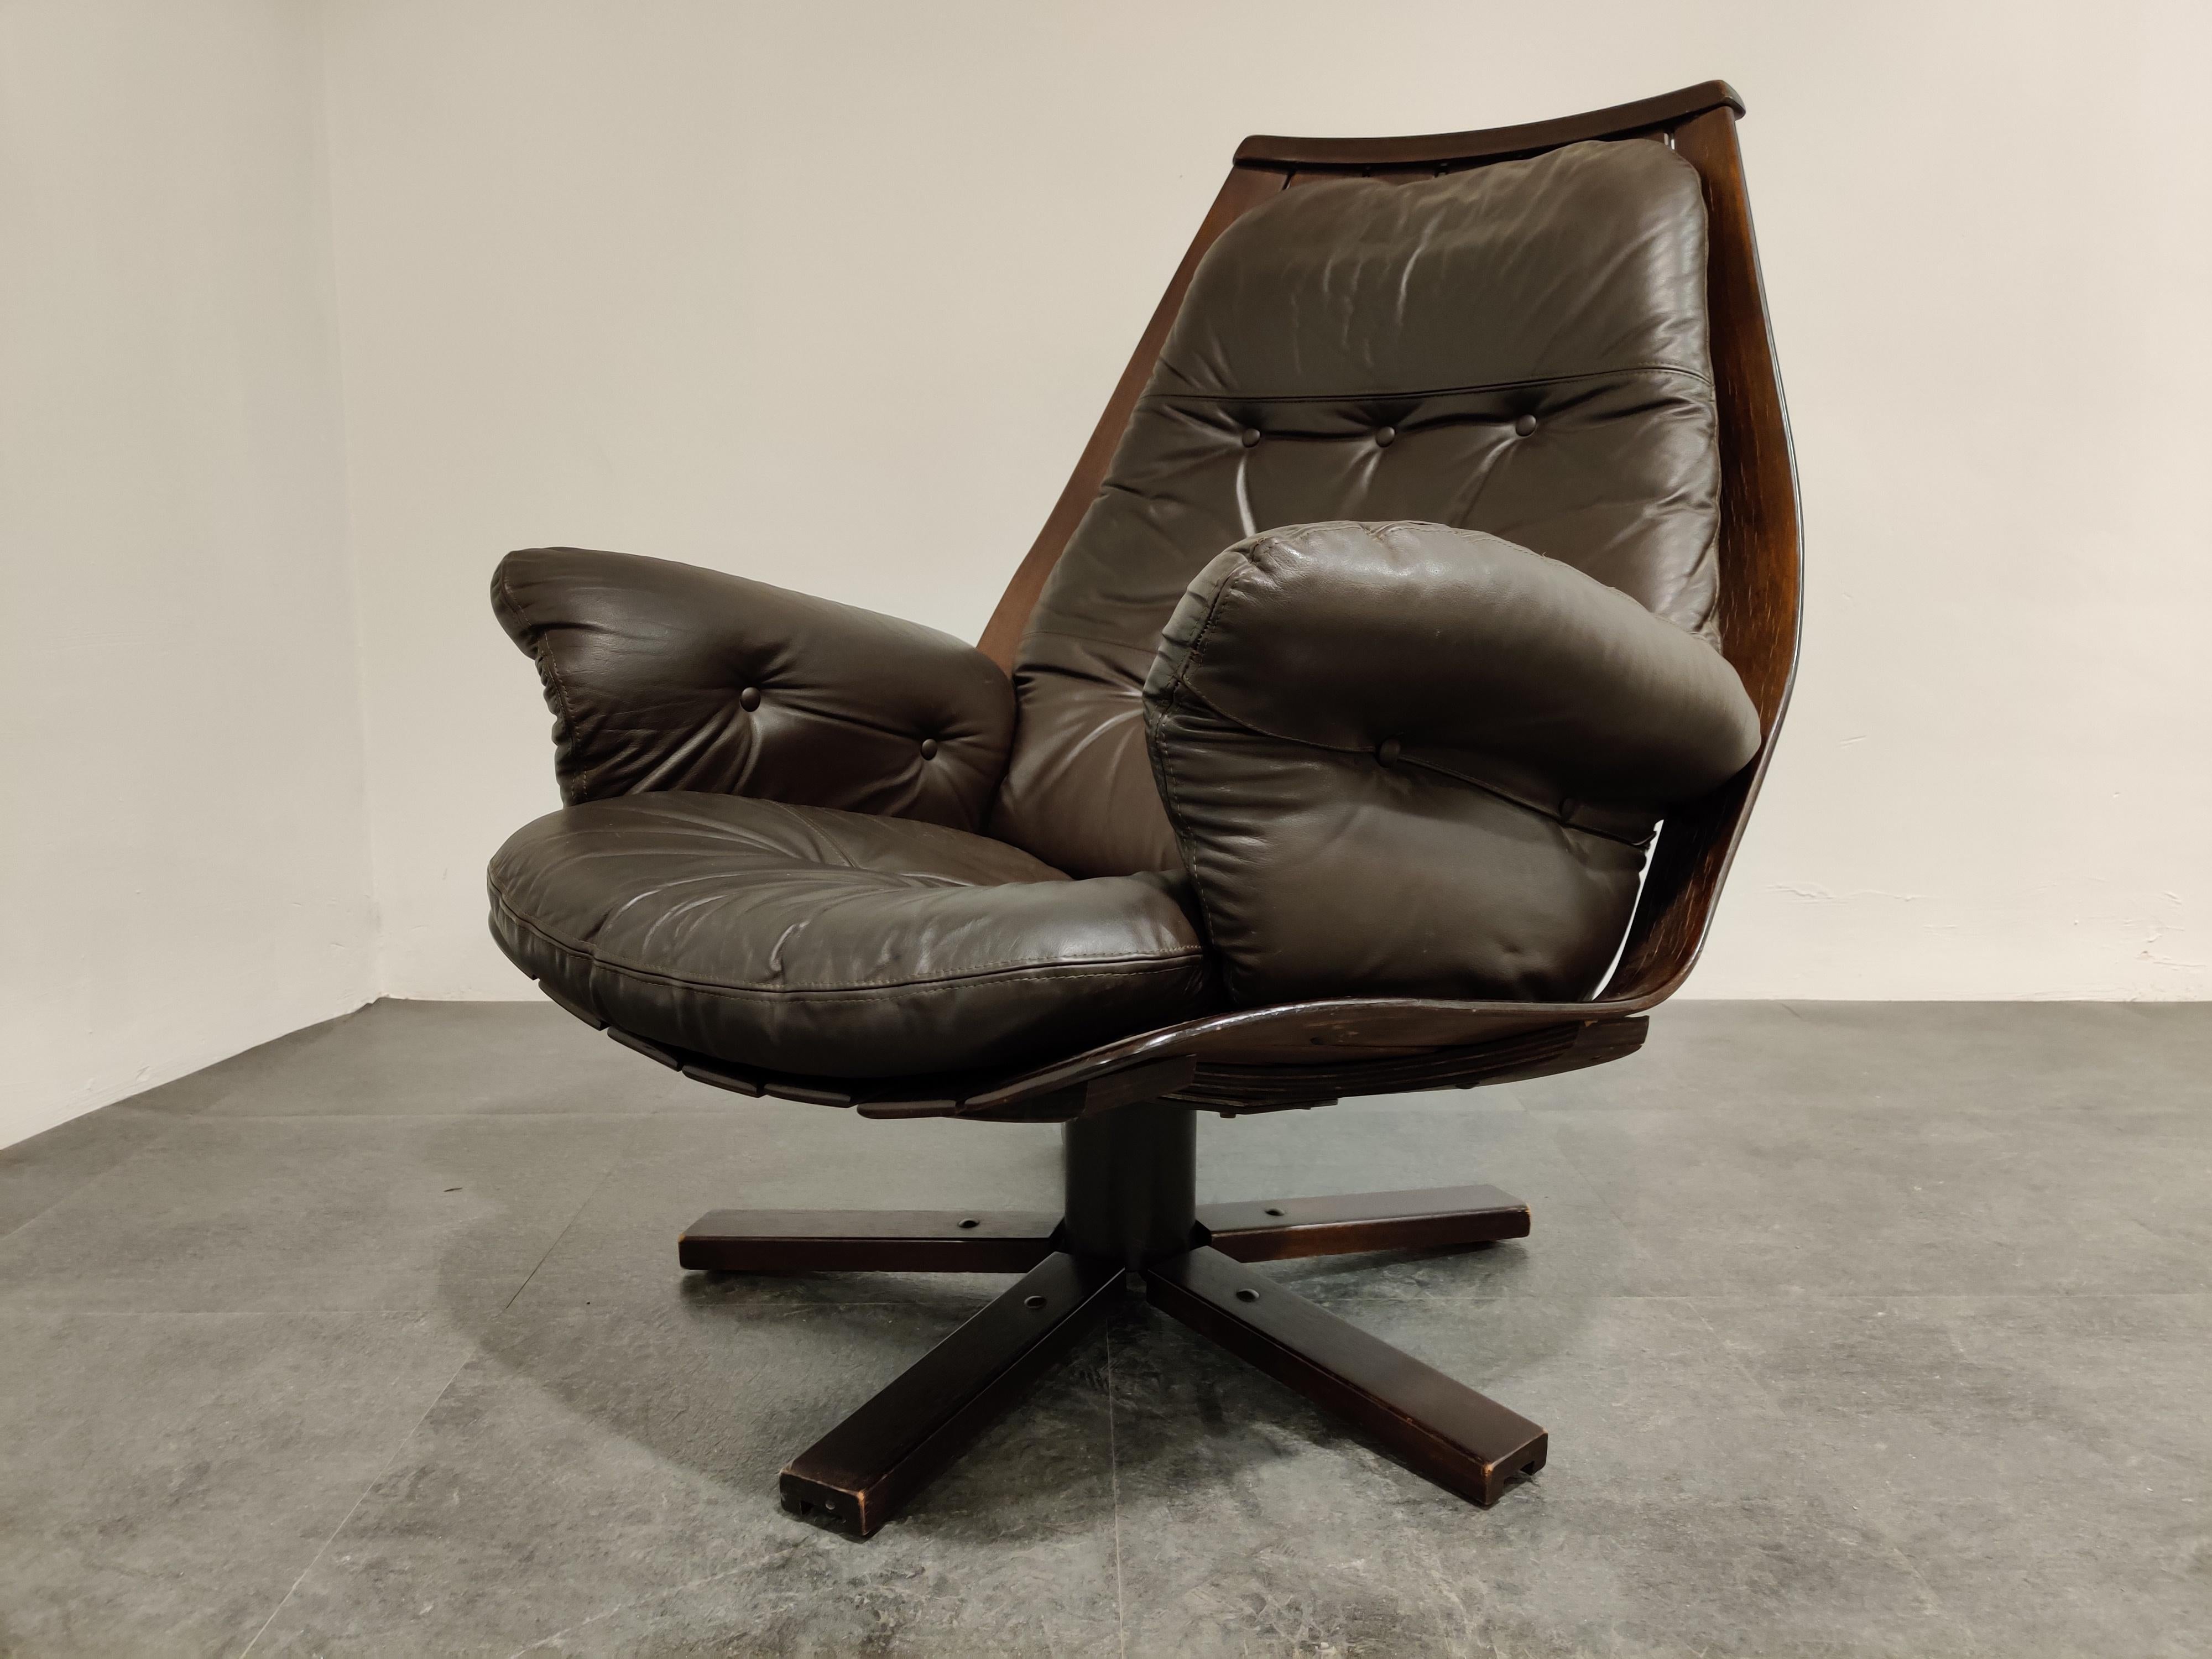 Scandinavian Modern Vintage Leather Swivel Chair Attributed to Hans Brattrud, 1960s